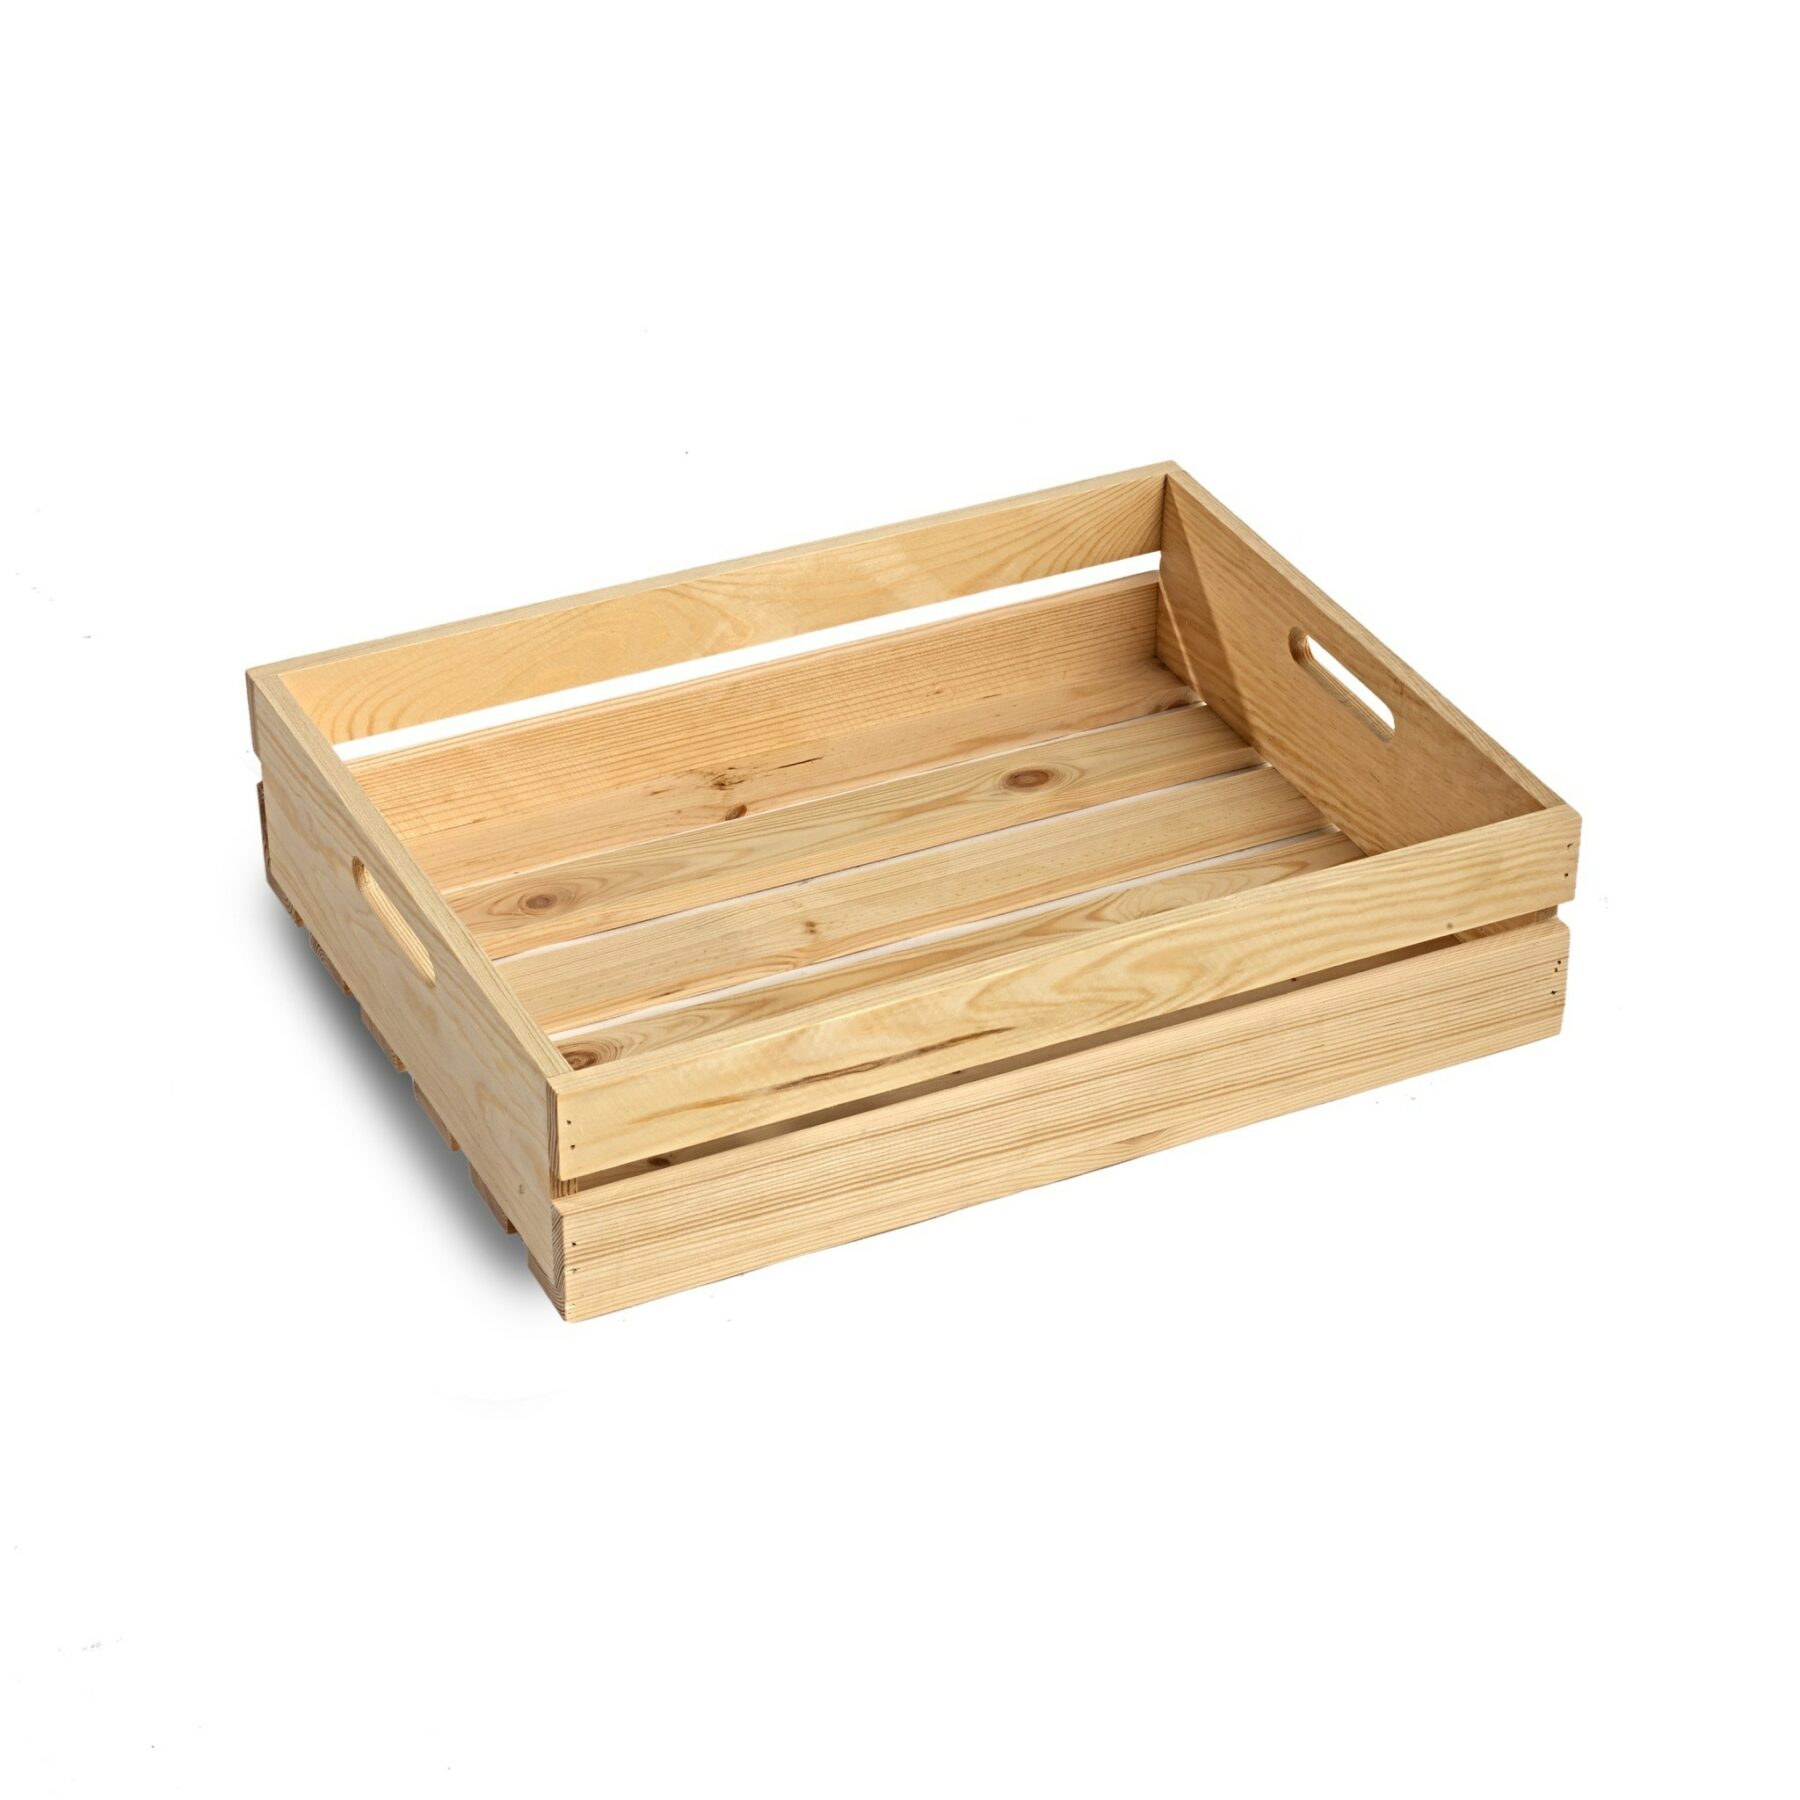 Wooden Crate - 50cm